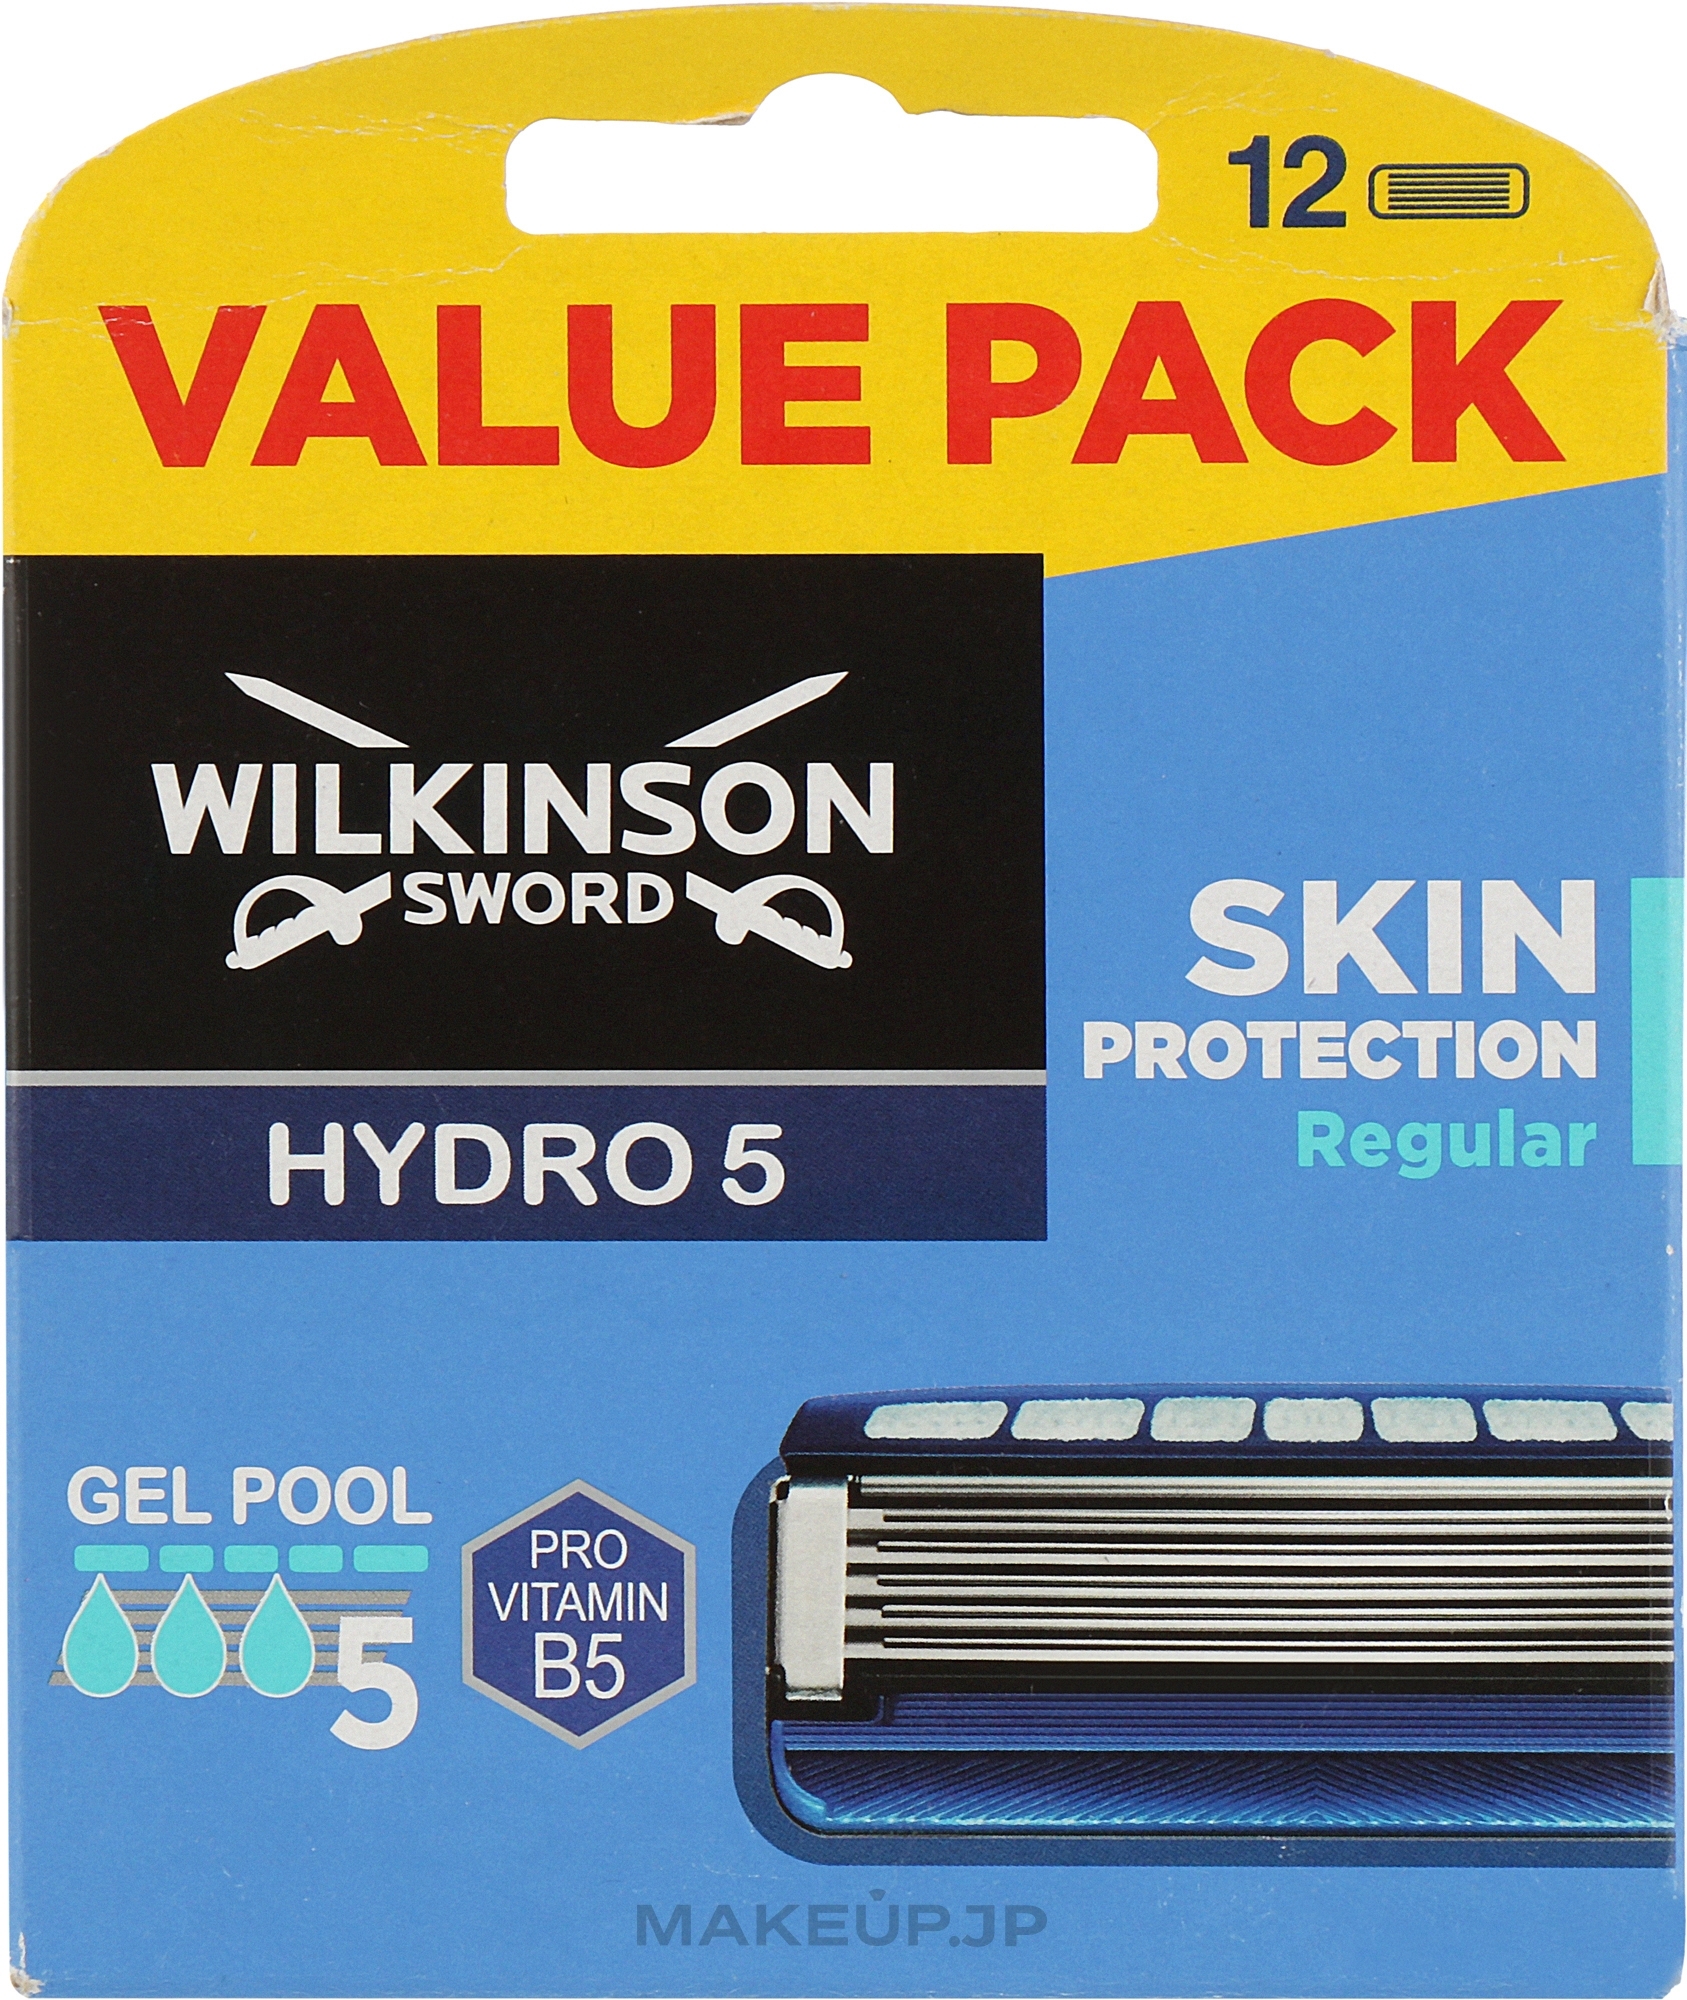 Refill Blade Set "Hydro 5", 12 pcs - Wilkinson Sword Hydro 5 Skin Protection Regular — photo 12 szt.